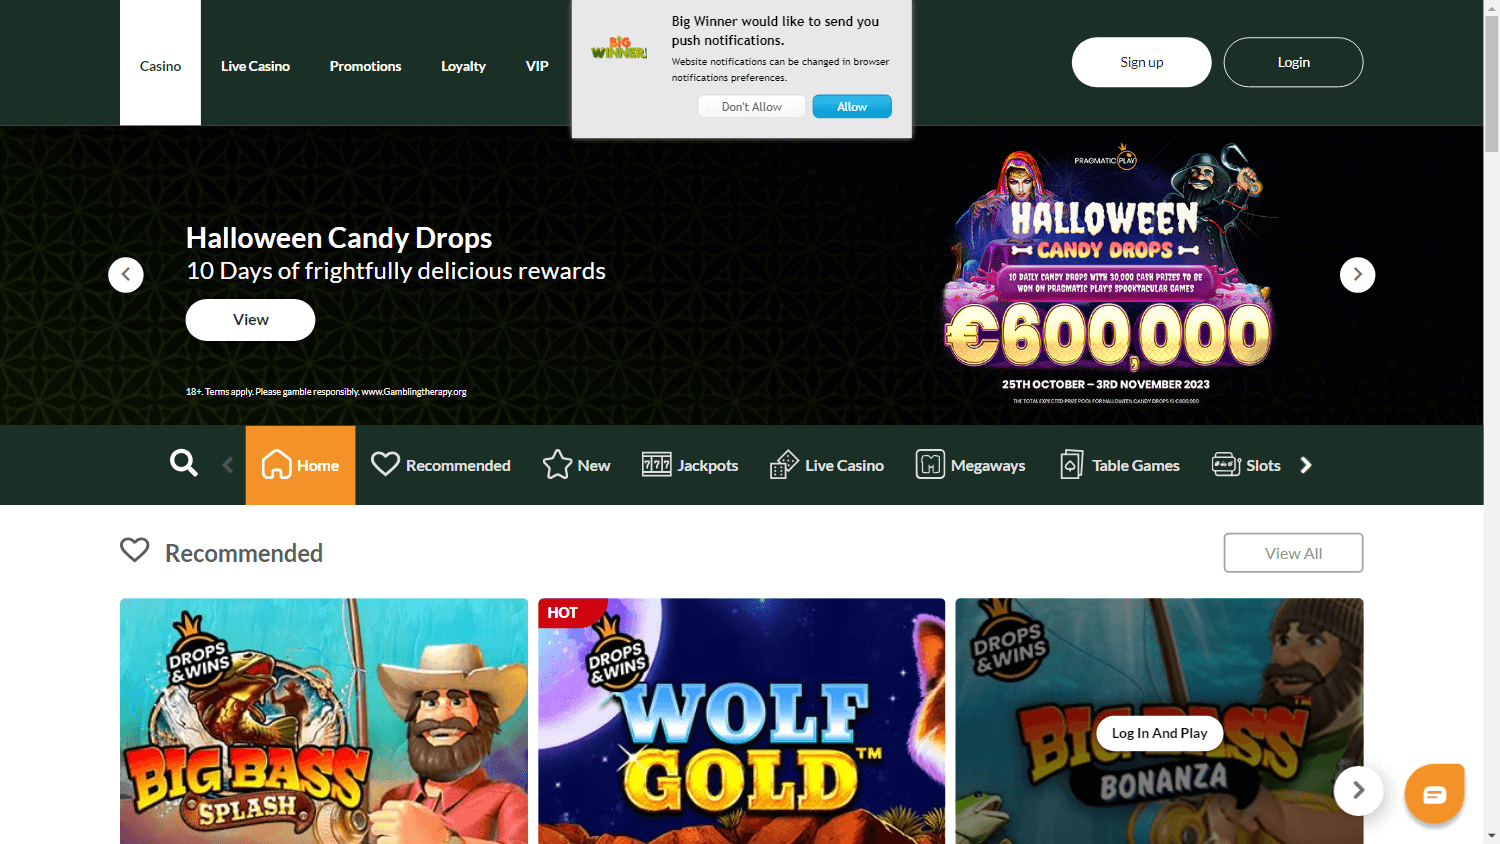 bigwinner_casino_homepage_desktop